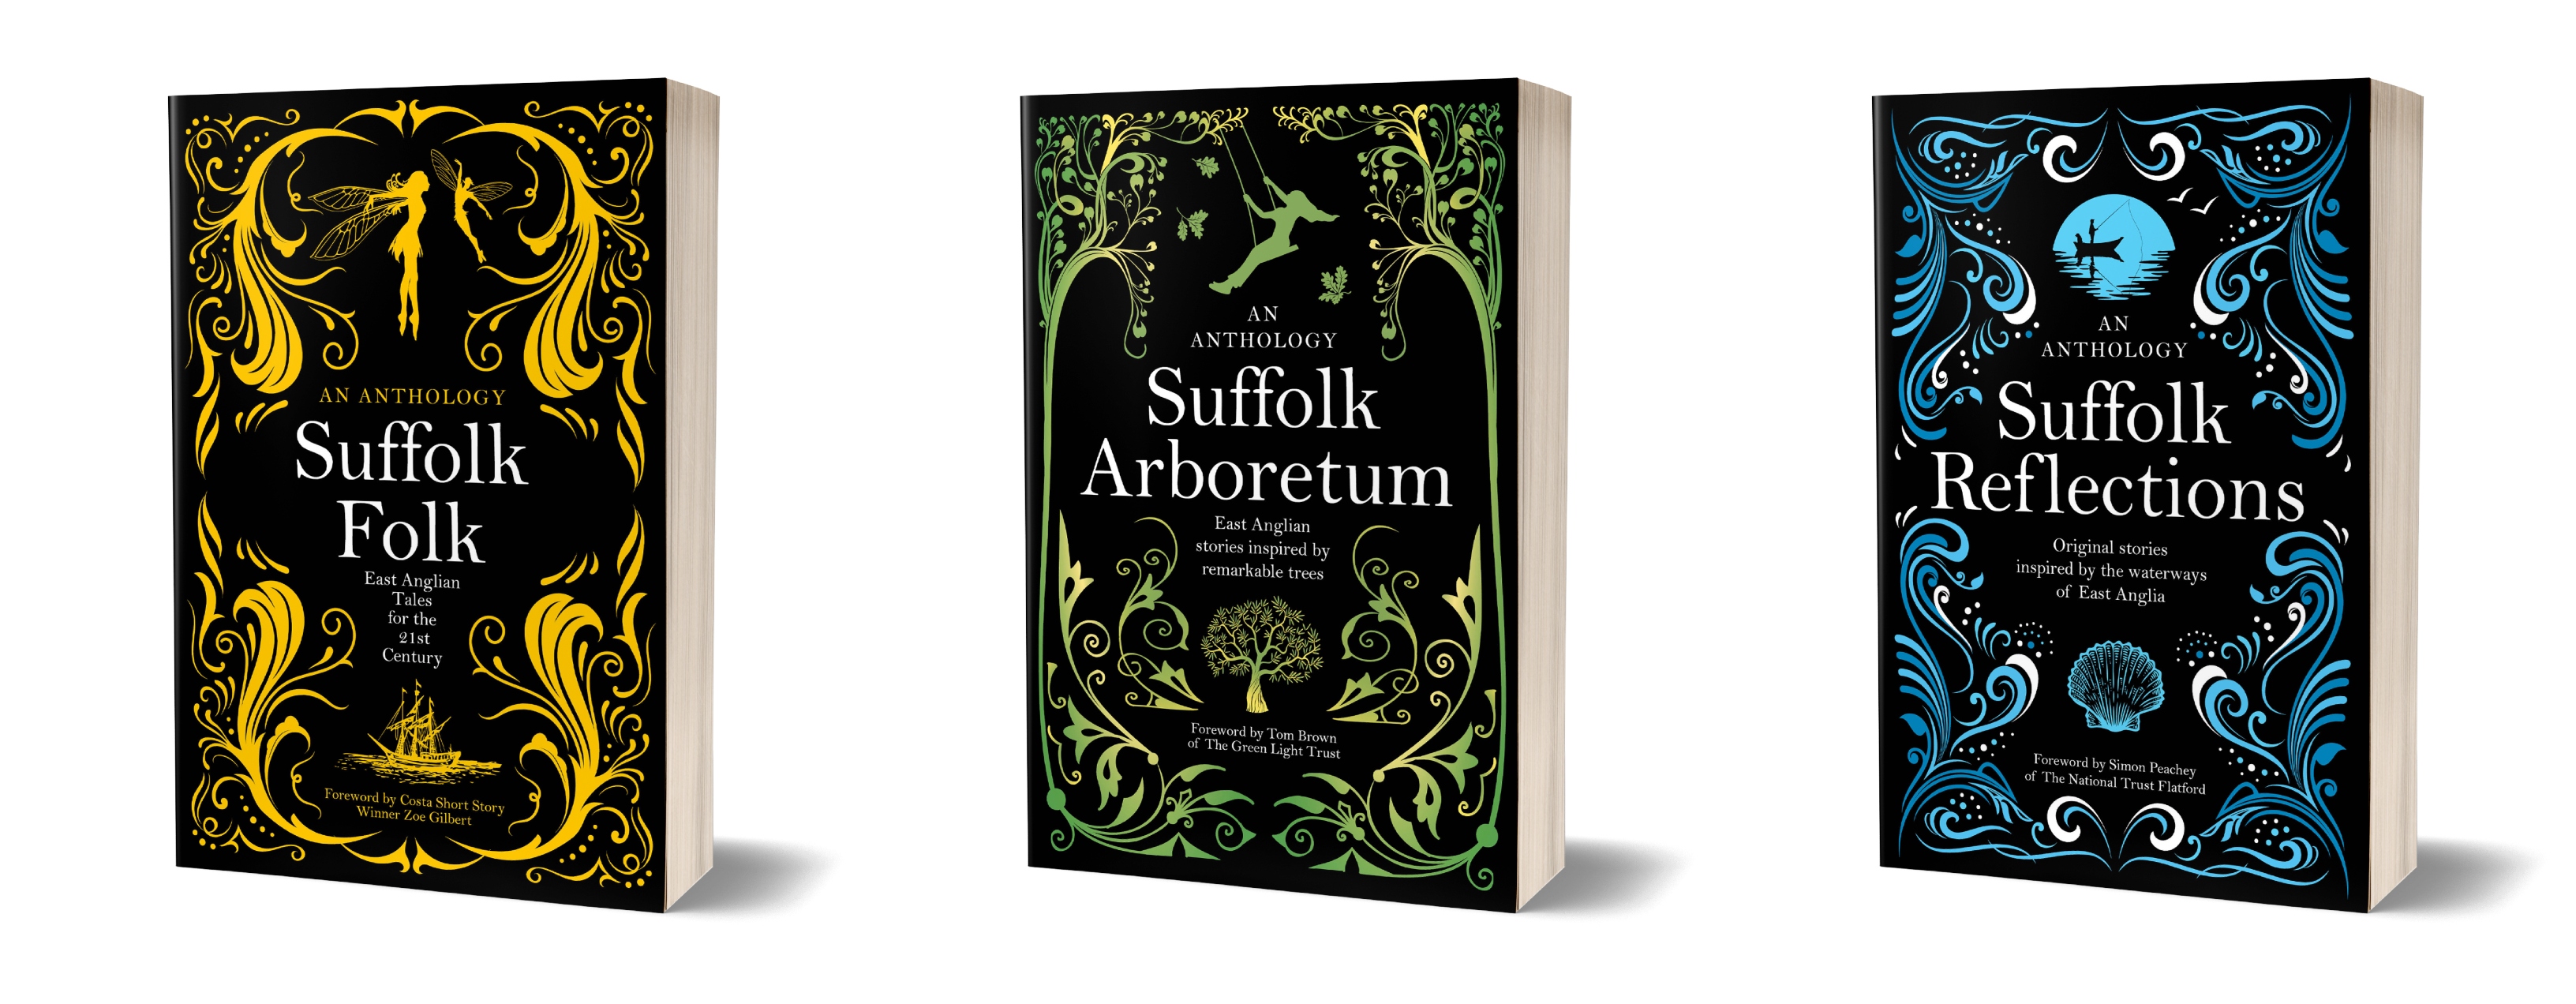 Suffolk Folk, Suffolk Arboretum, Suffolk Reflections book covers